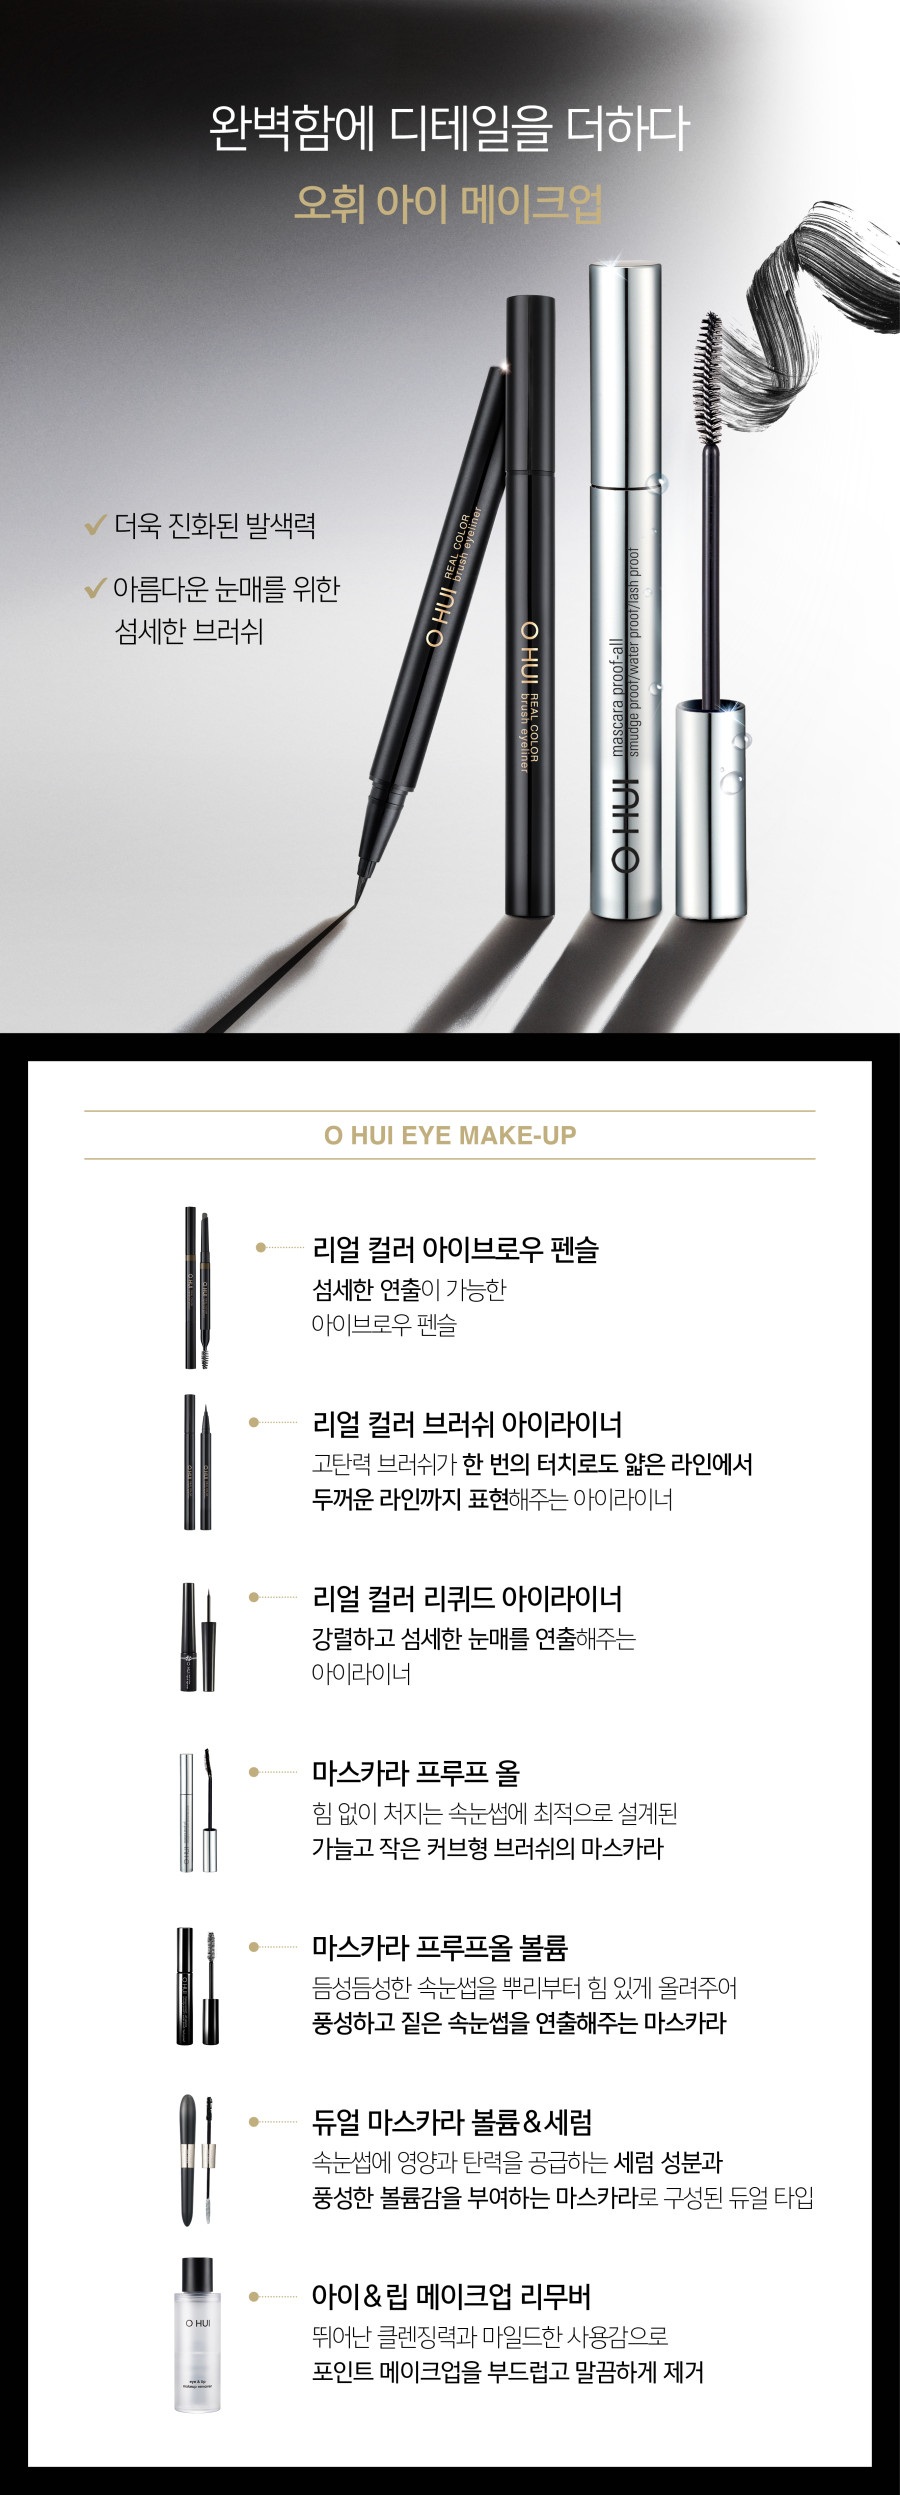 OHUI Real Color Brush Eyeliner korean skincare product online shop malaysia China poland1